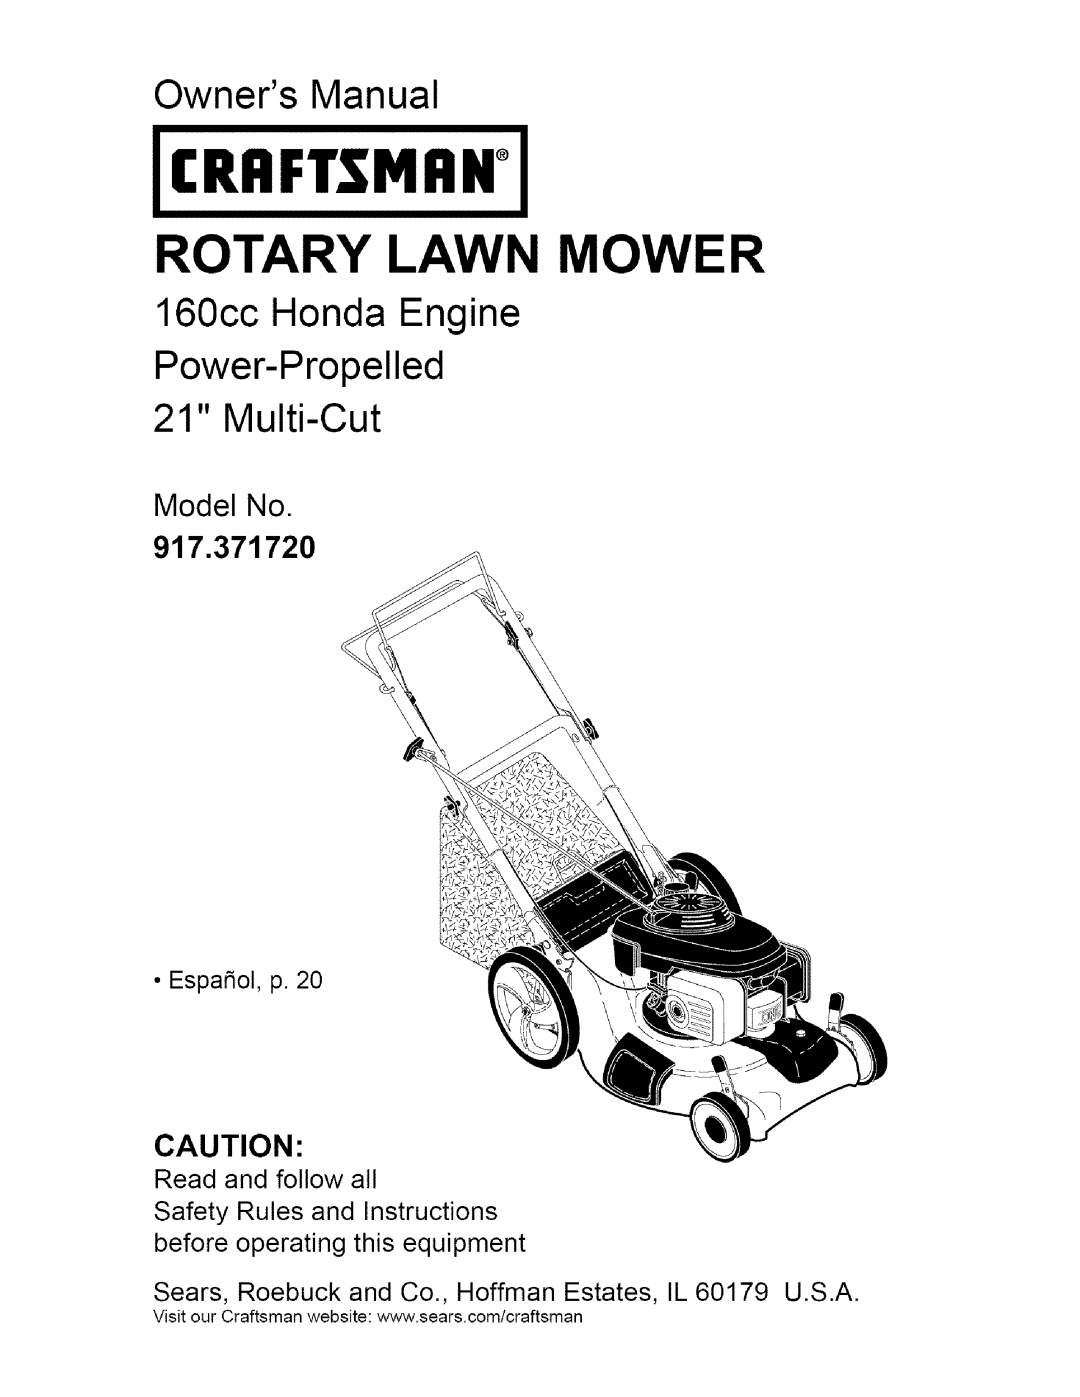 Craftsman 917.37172 owner manual Multi-Cut, Model No, Crrftsmiin, Rotary Lawn Mower, 160cc Honda Engine Power-Propelled 